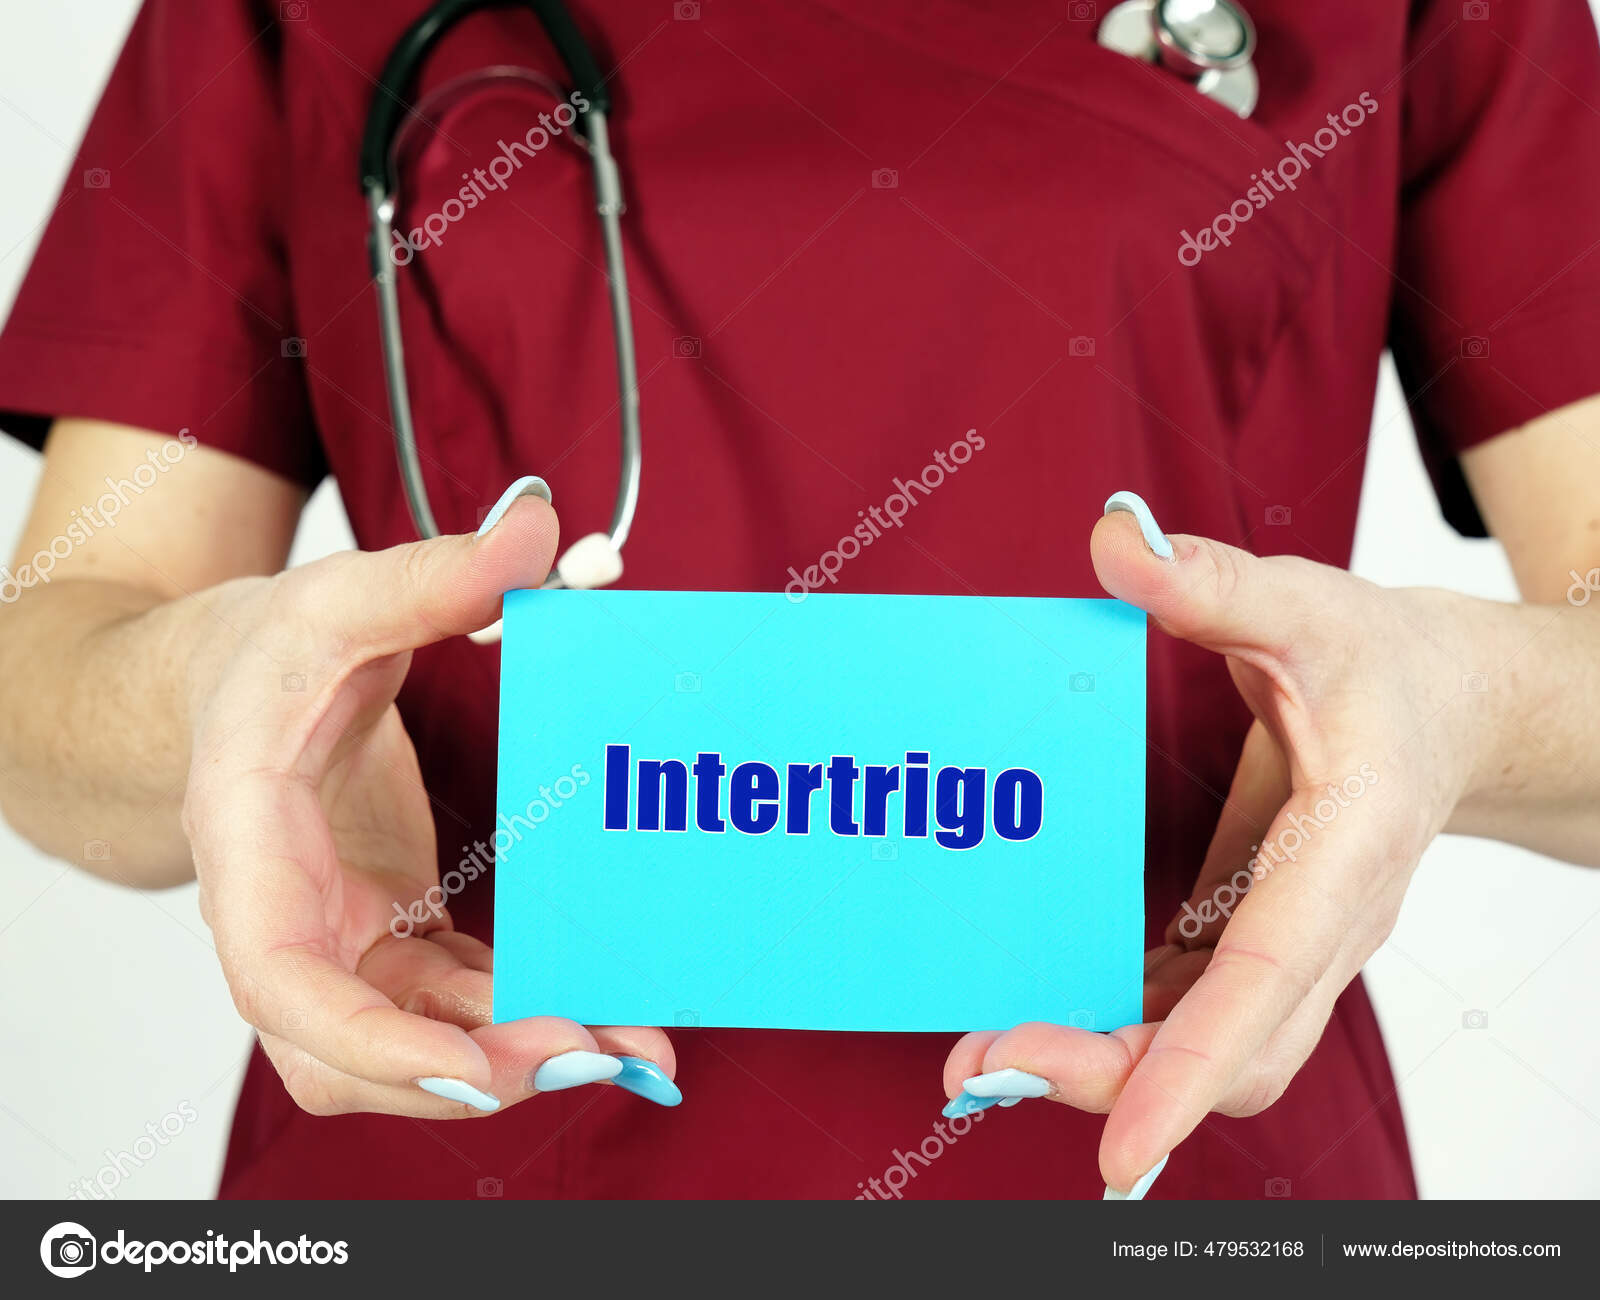 Interigo Intertrigo: The